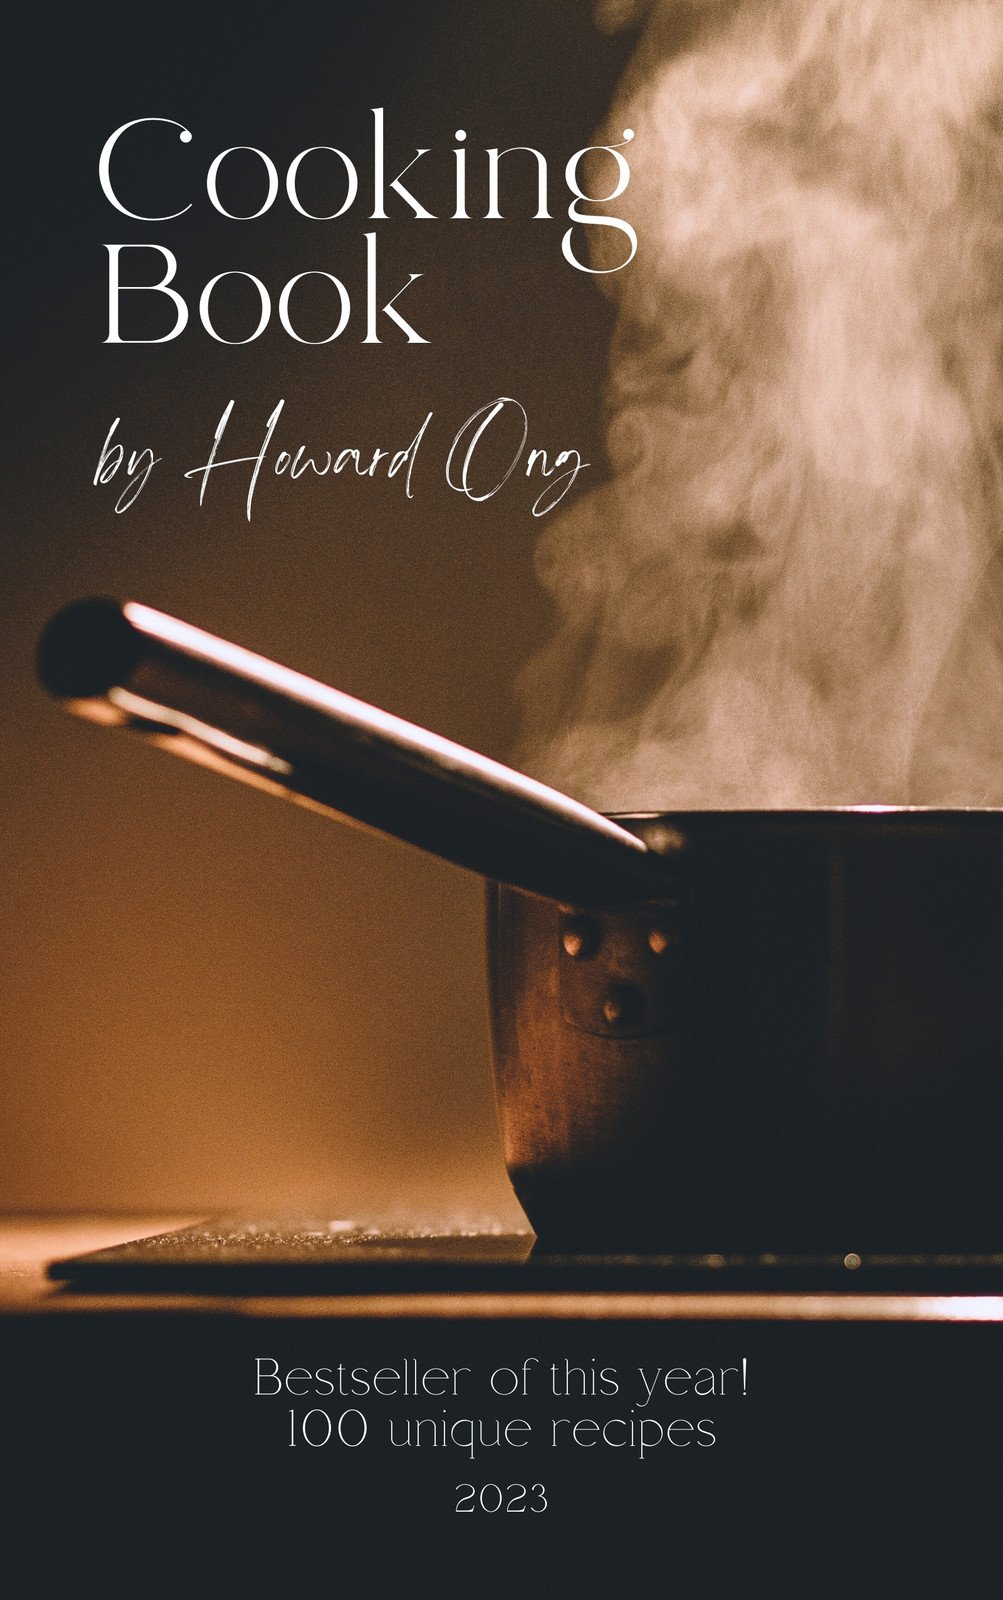 https://marketplace.canva.com/EAFqIJygRYU/1/0/1003w/canva-black-modern-cooking-food-recipe-photo-book-cover-Oue7PkCrWB4.jpg